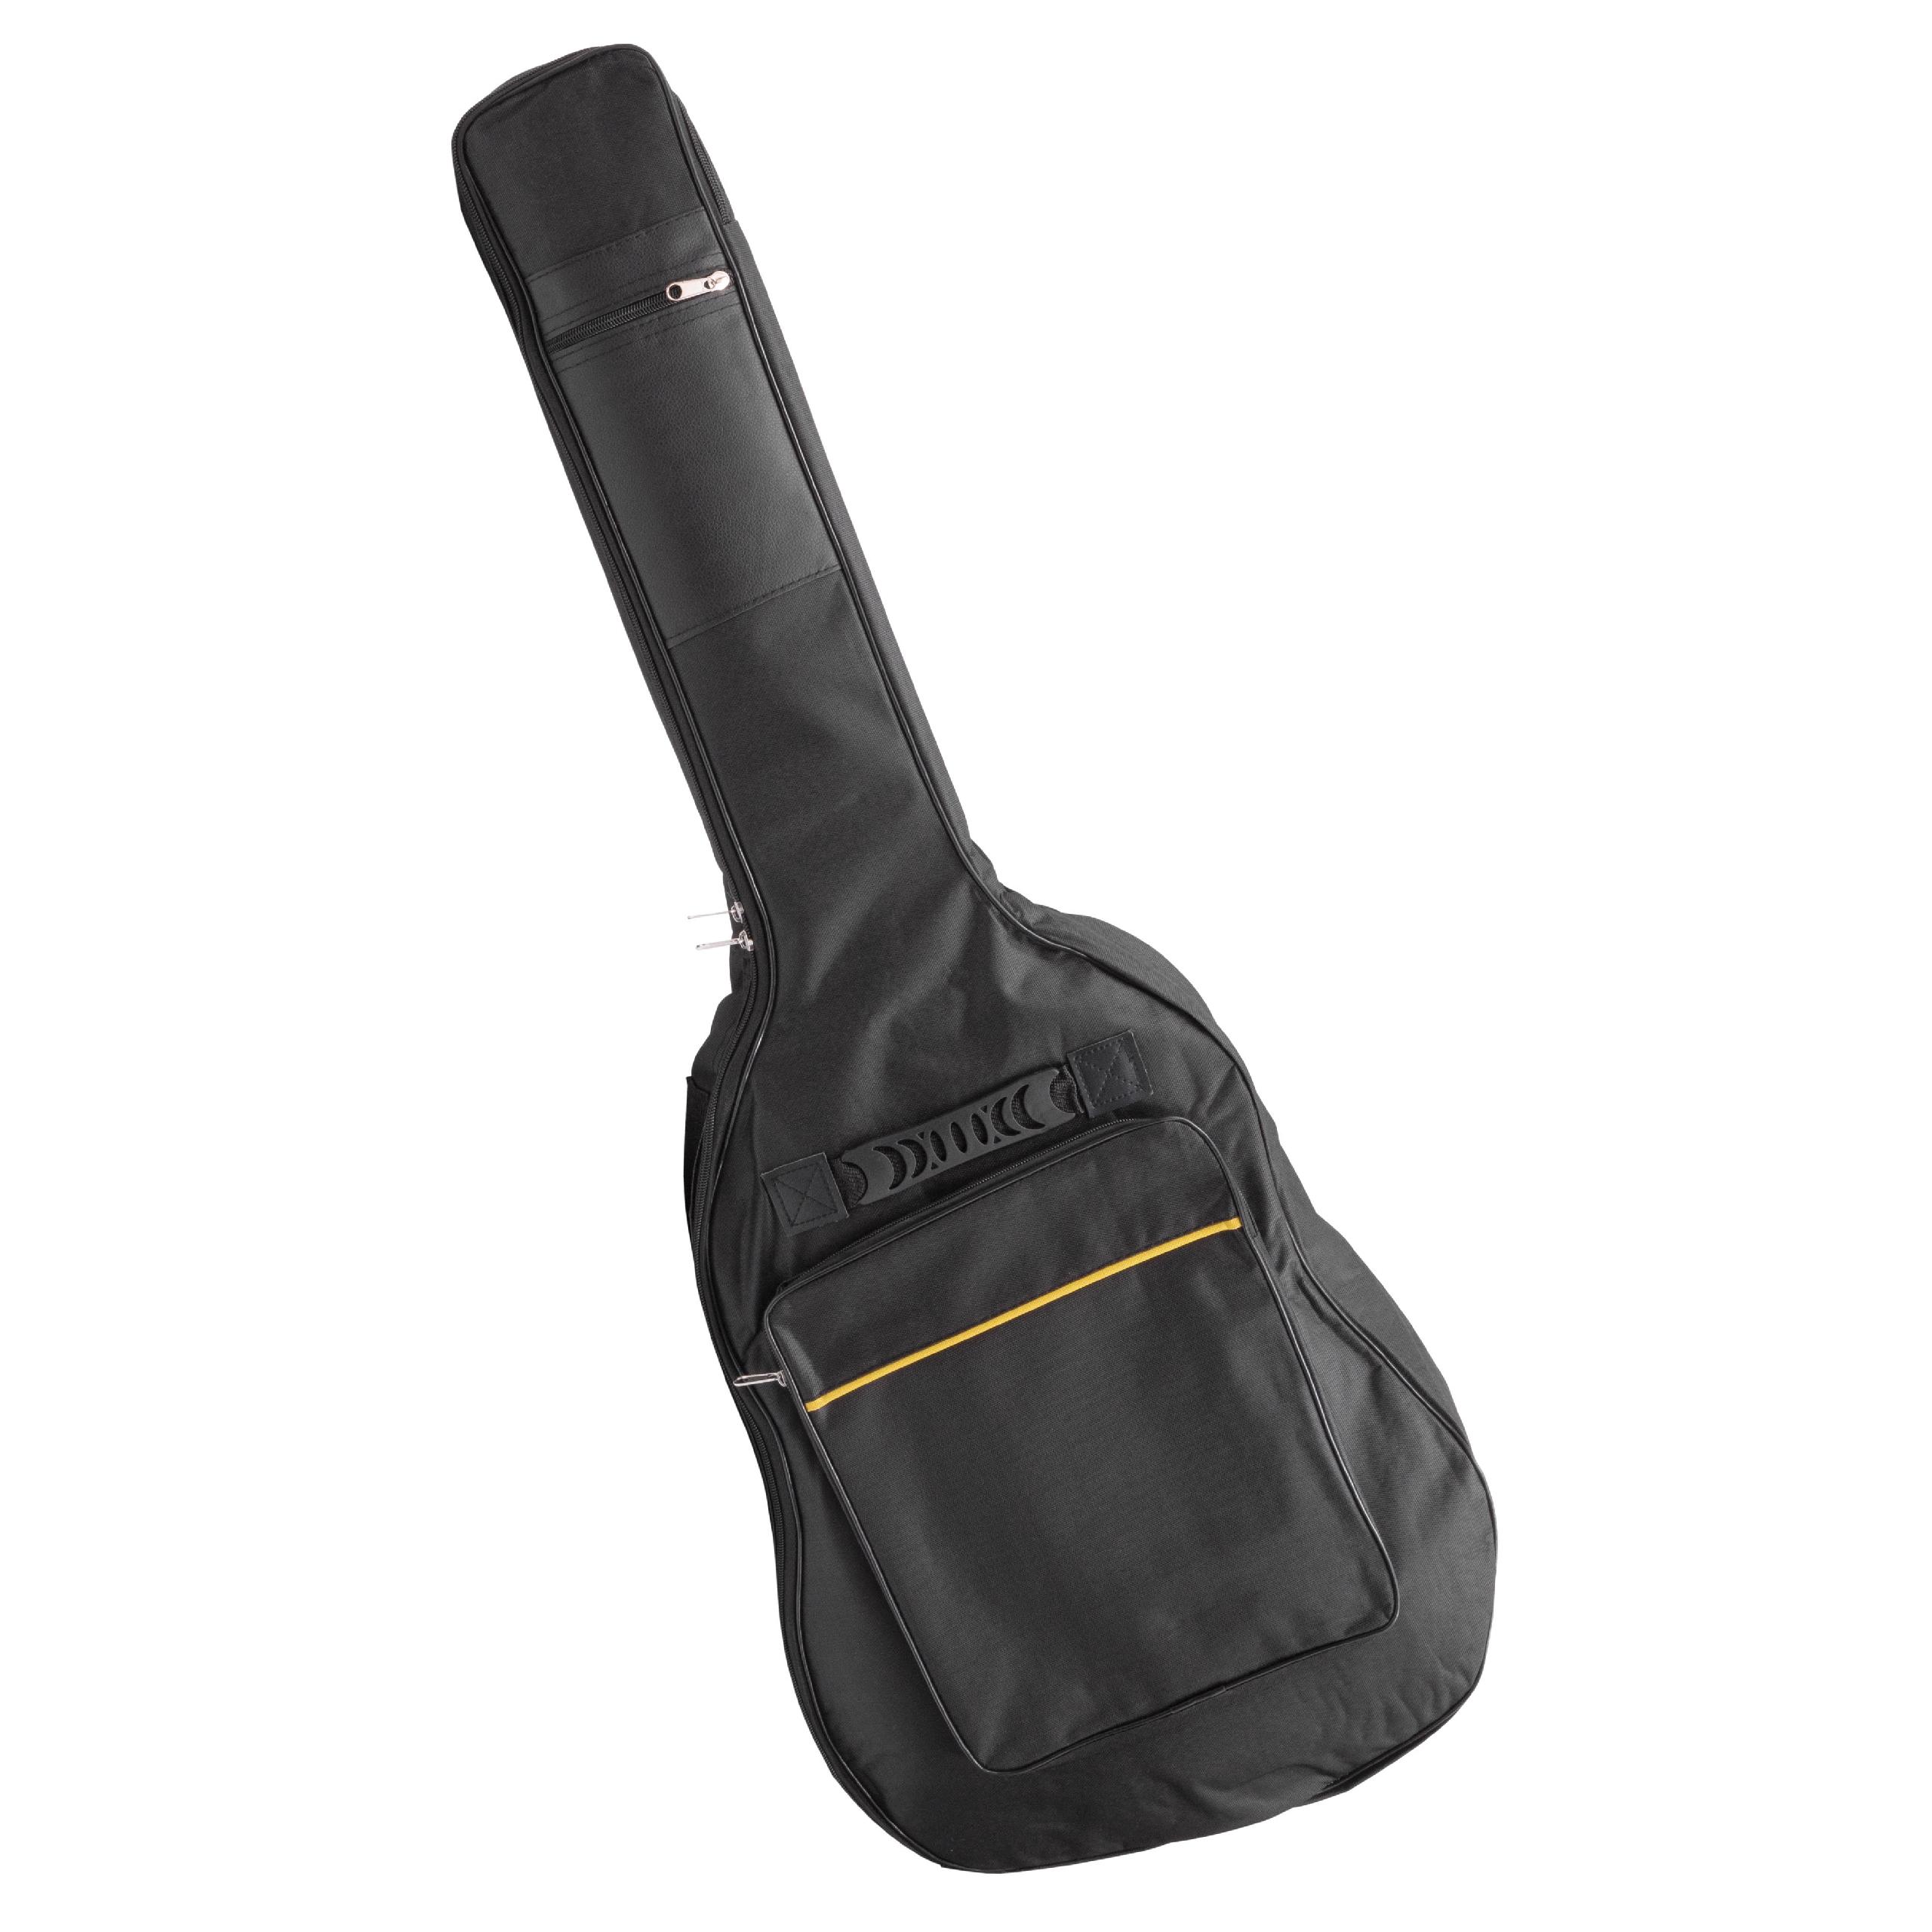 vhbw custodia, borsa adatta a chitarra elettrica per es. di Ibanez, Yamaha - imbottita, ergonomica, resistente